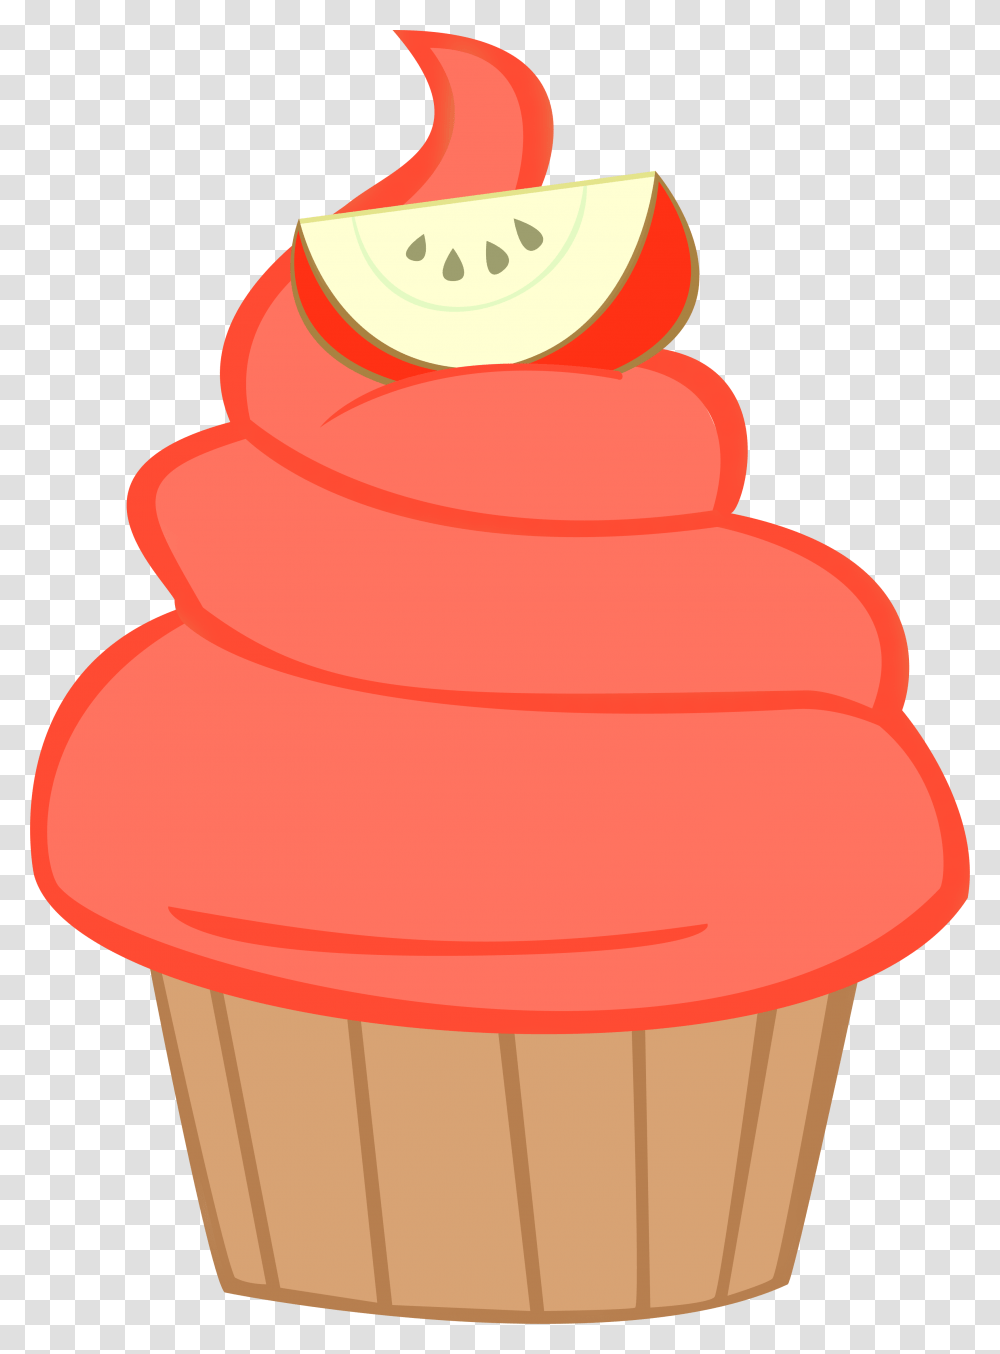 Image Result For Mlp My Little Pony Apple Cupcakes, Cream, Dessert, Food, Creme Transparent Png